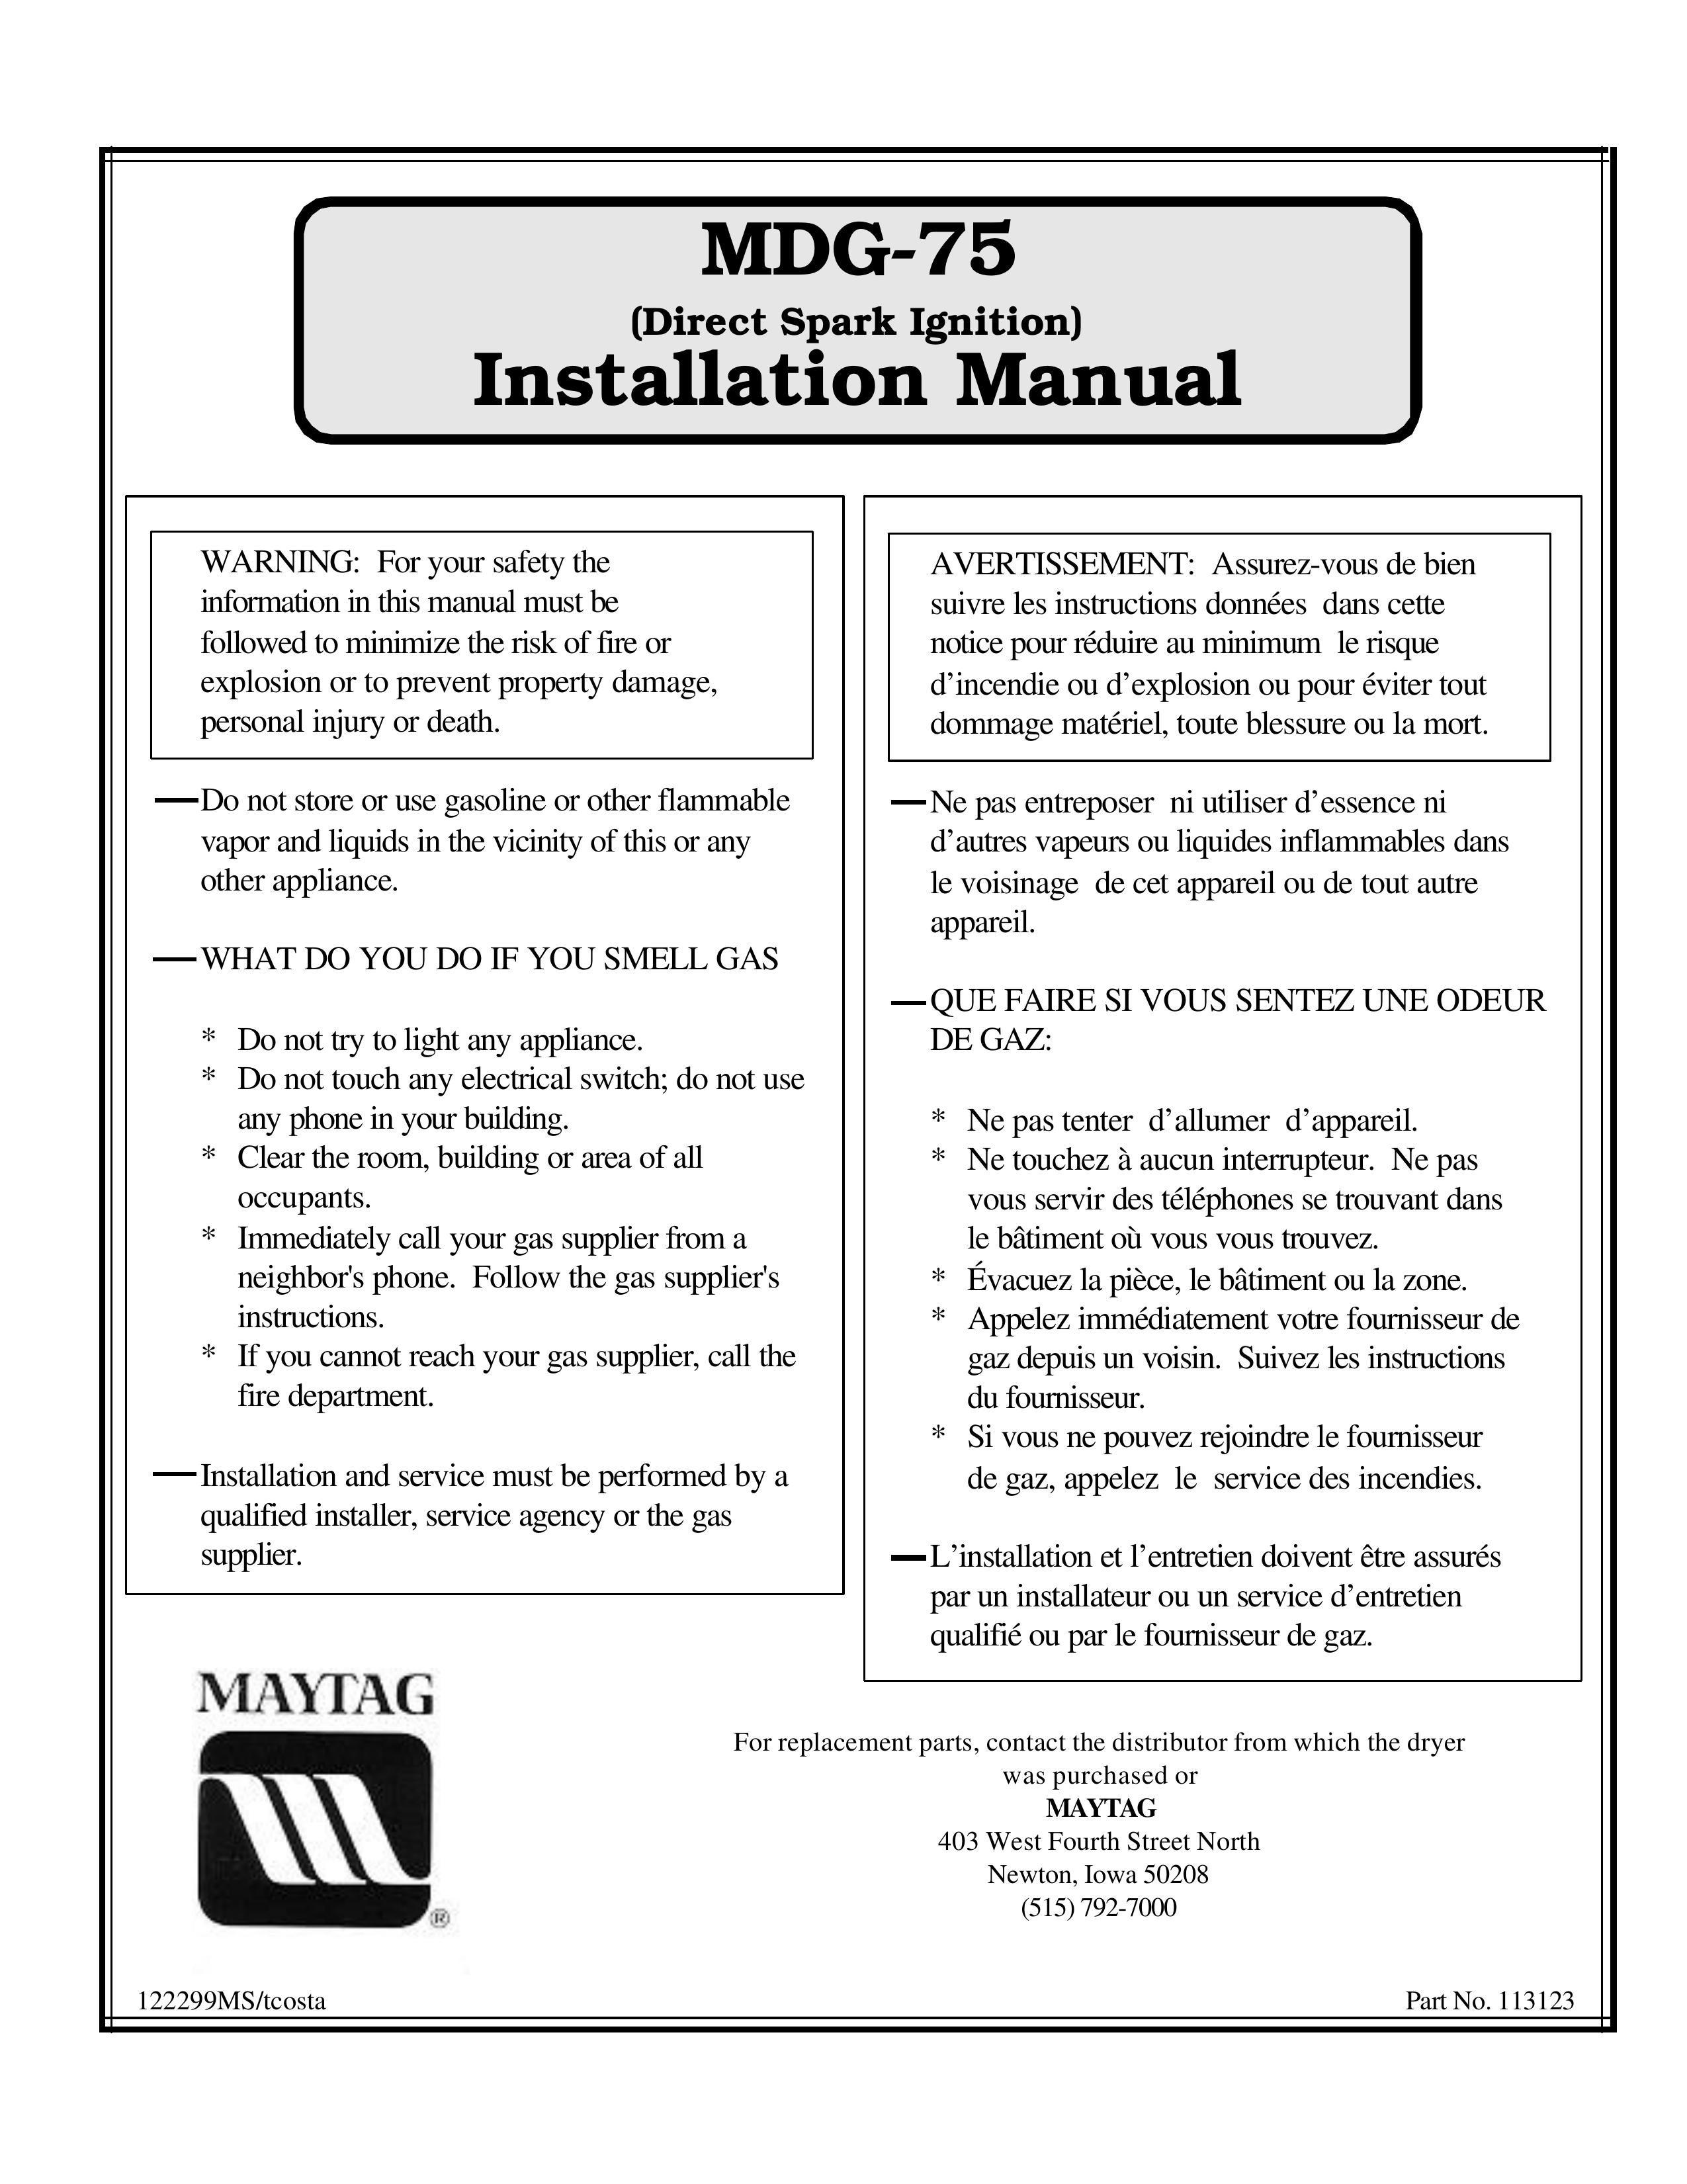 Maytag MDG-75 Washer/Dryer User Manual